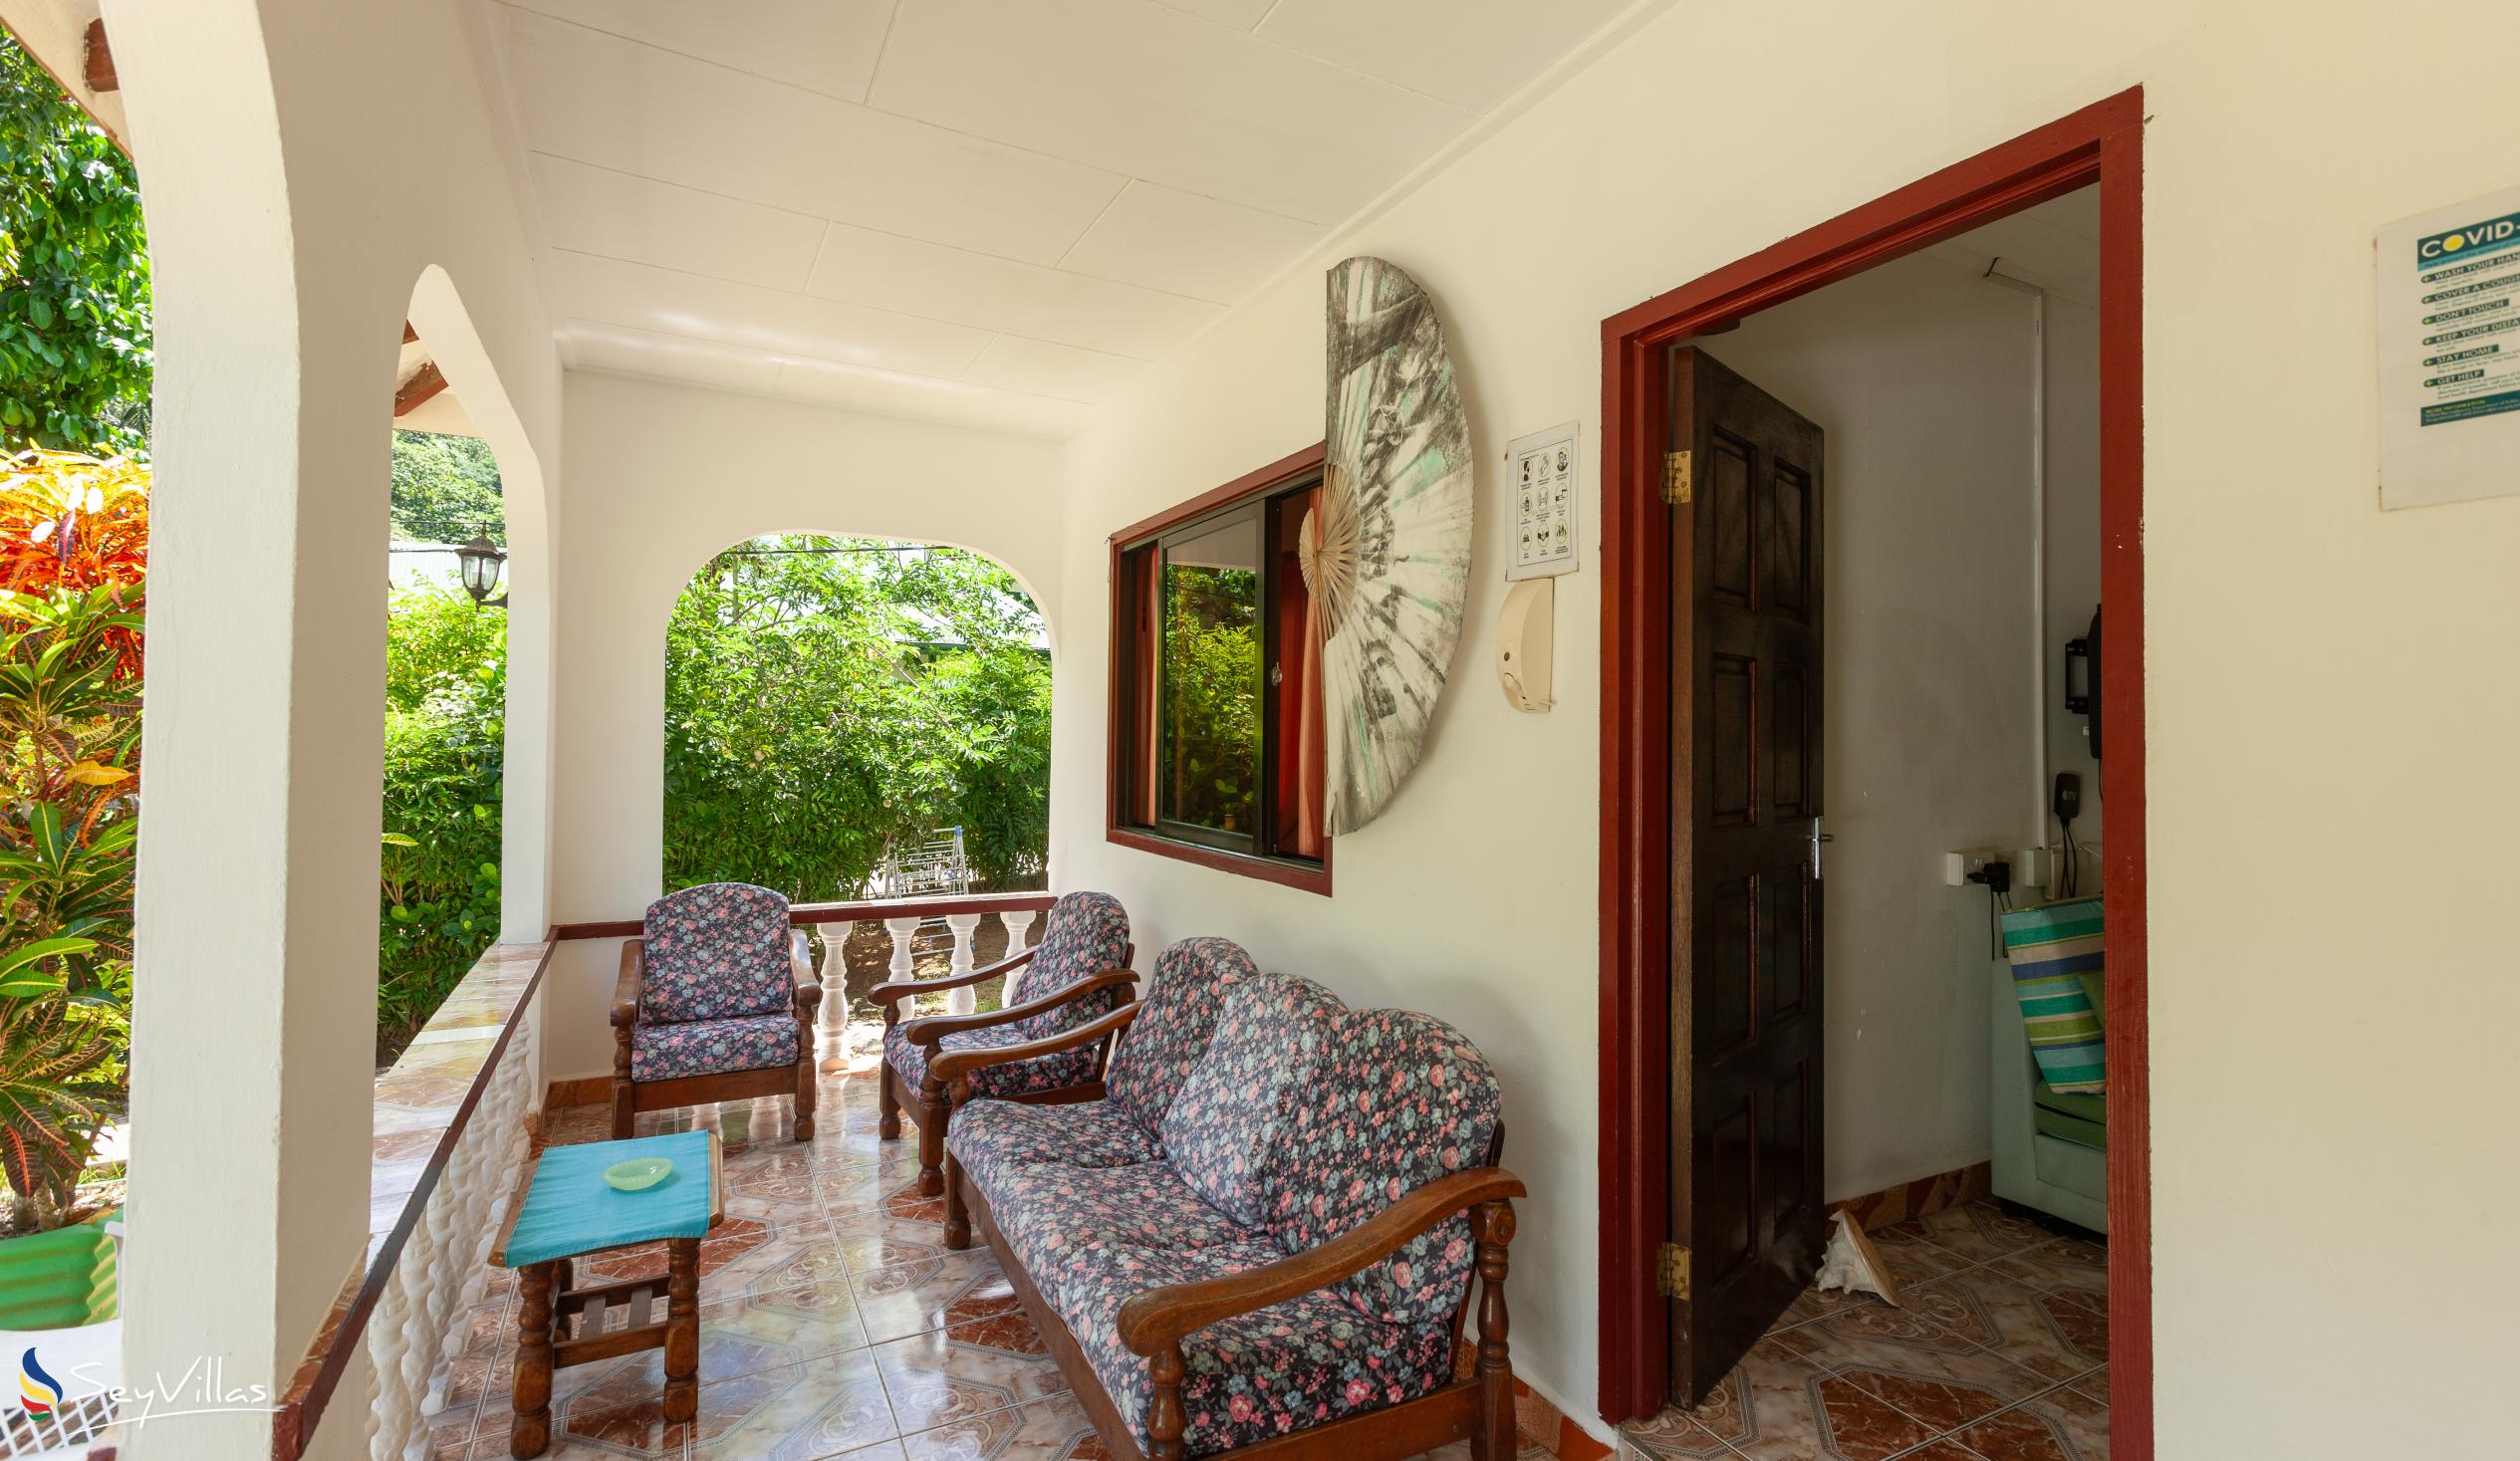 Foto 36: Dan Kazou - Appartement 2 chambres - La Digue (Seychelles)